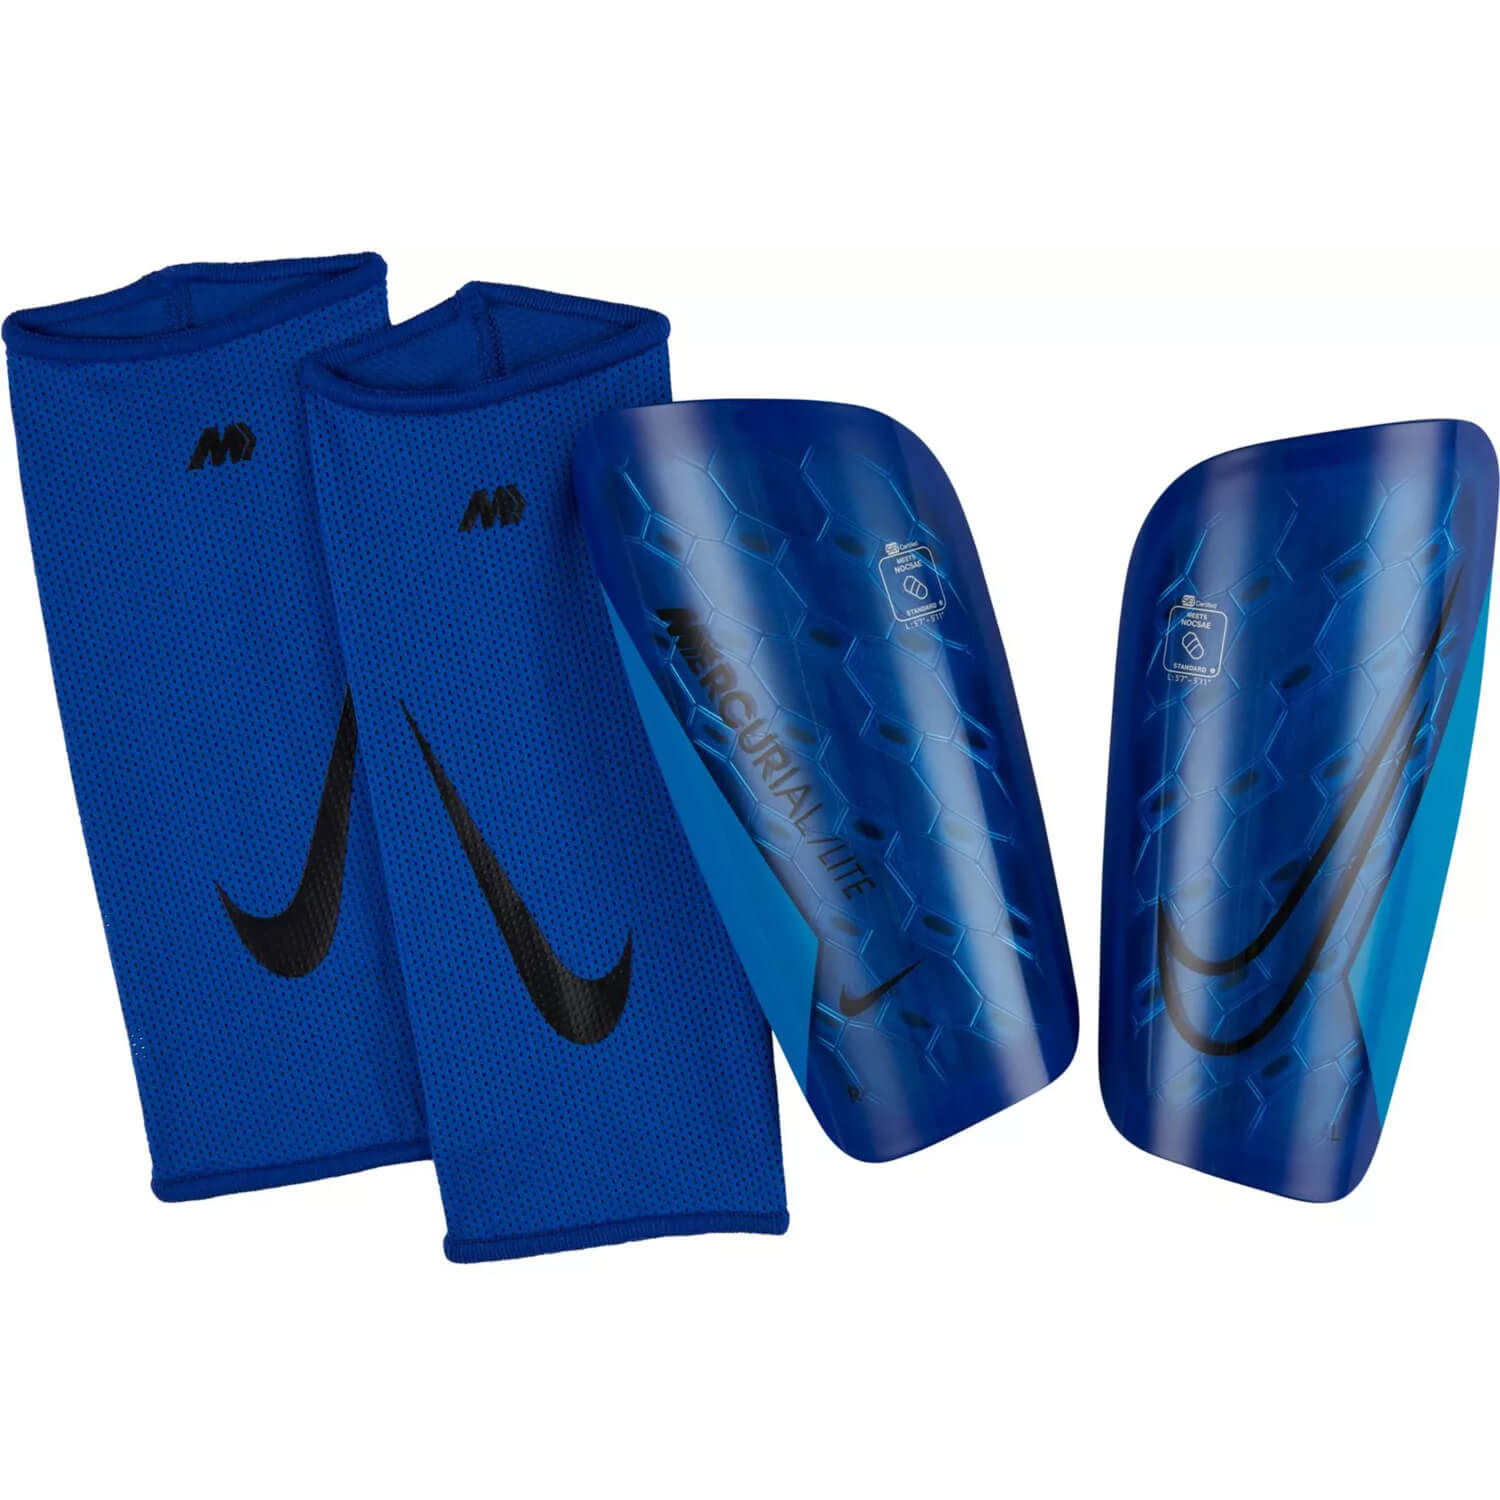 Nike Mercurial Lite Shinguards - Blastic Blue (Set)